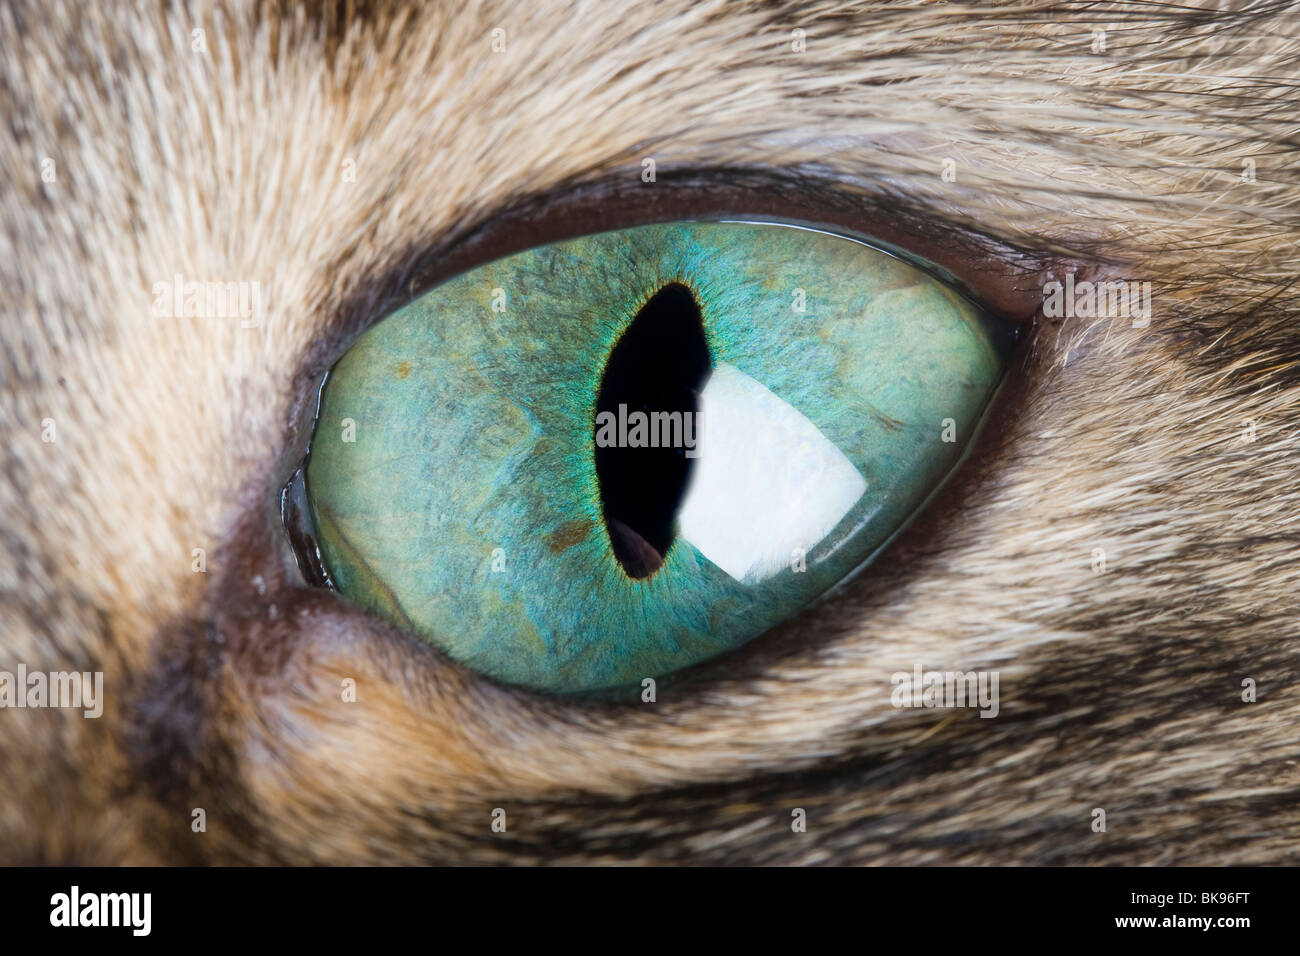 Macro de ojo de gato. Un primer plano de un ojo de gato mostrando la pupila vertical e iris verde hermoso. Foto de stock